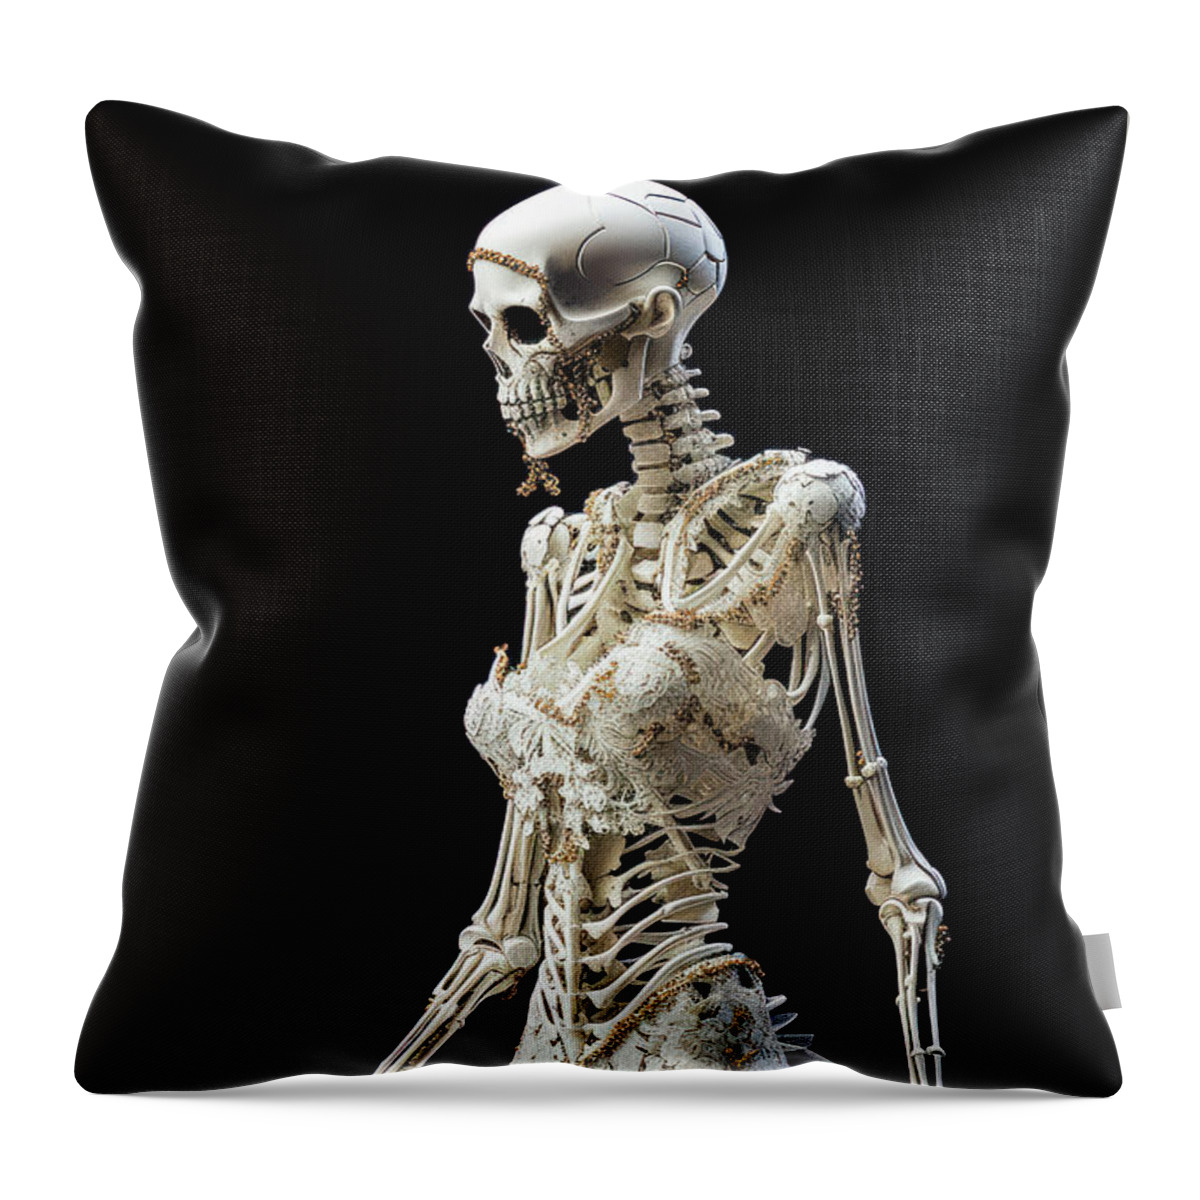 Skeleton Throw Pillow featuring the digital art Skeleton Bride 01 by Matthias Hauser